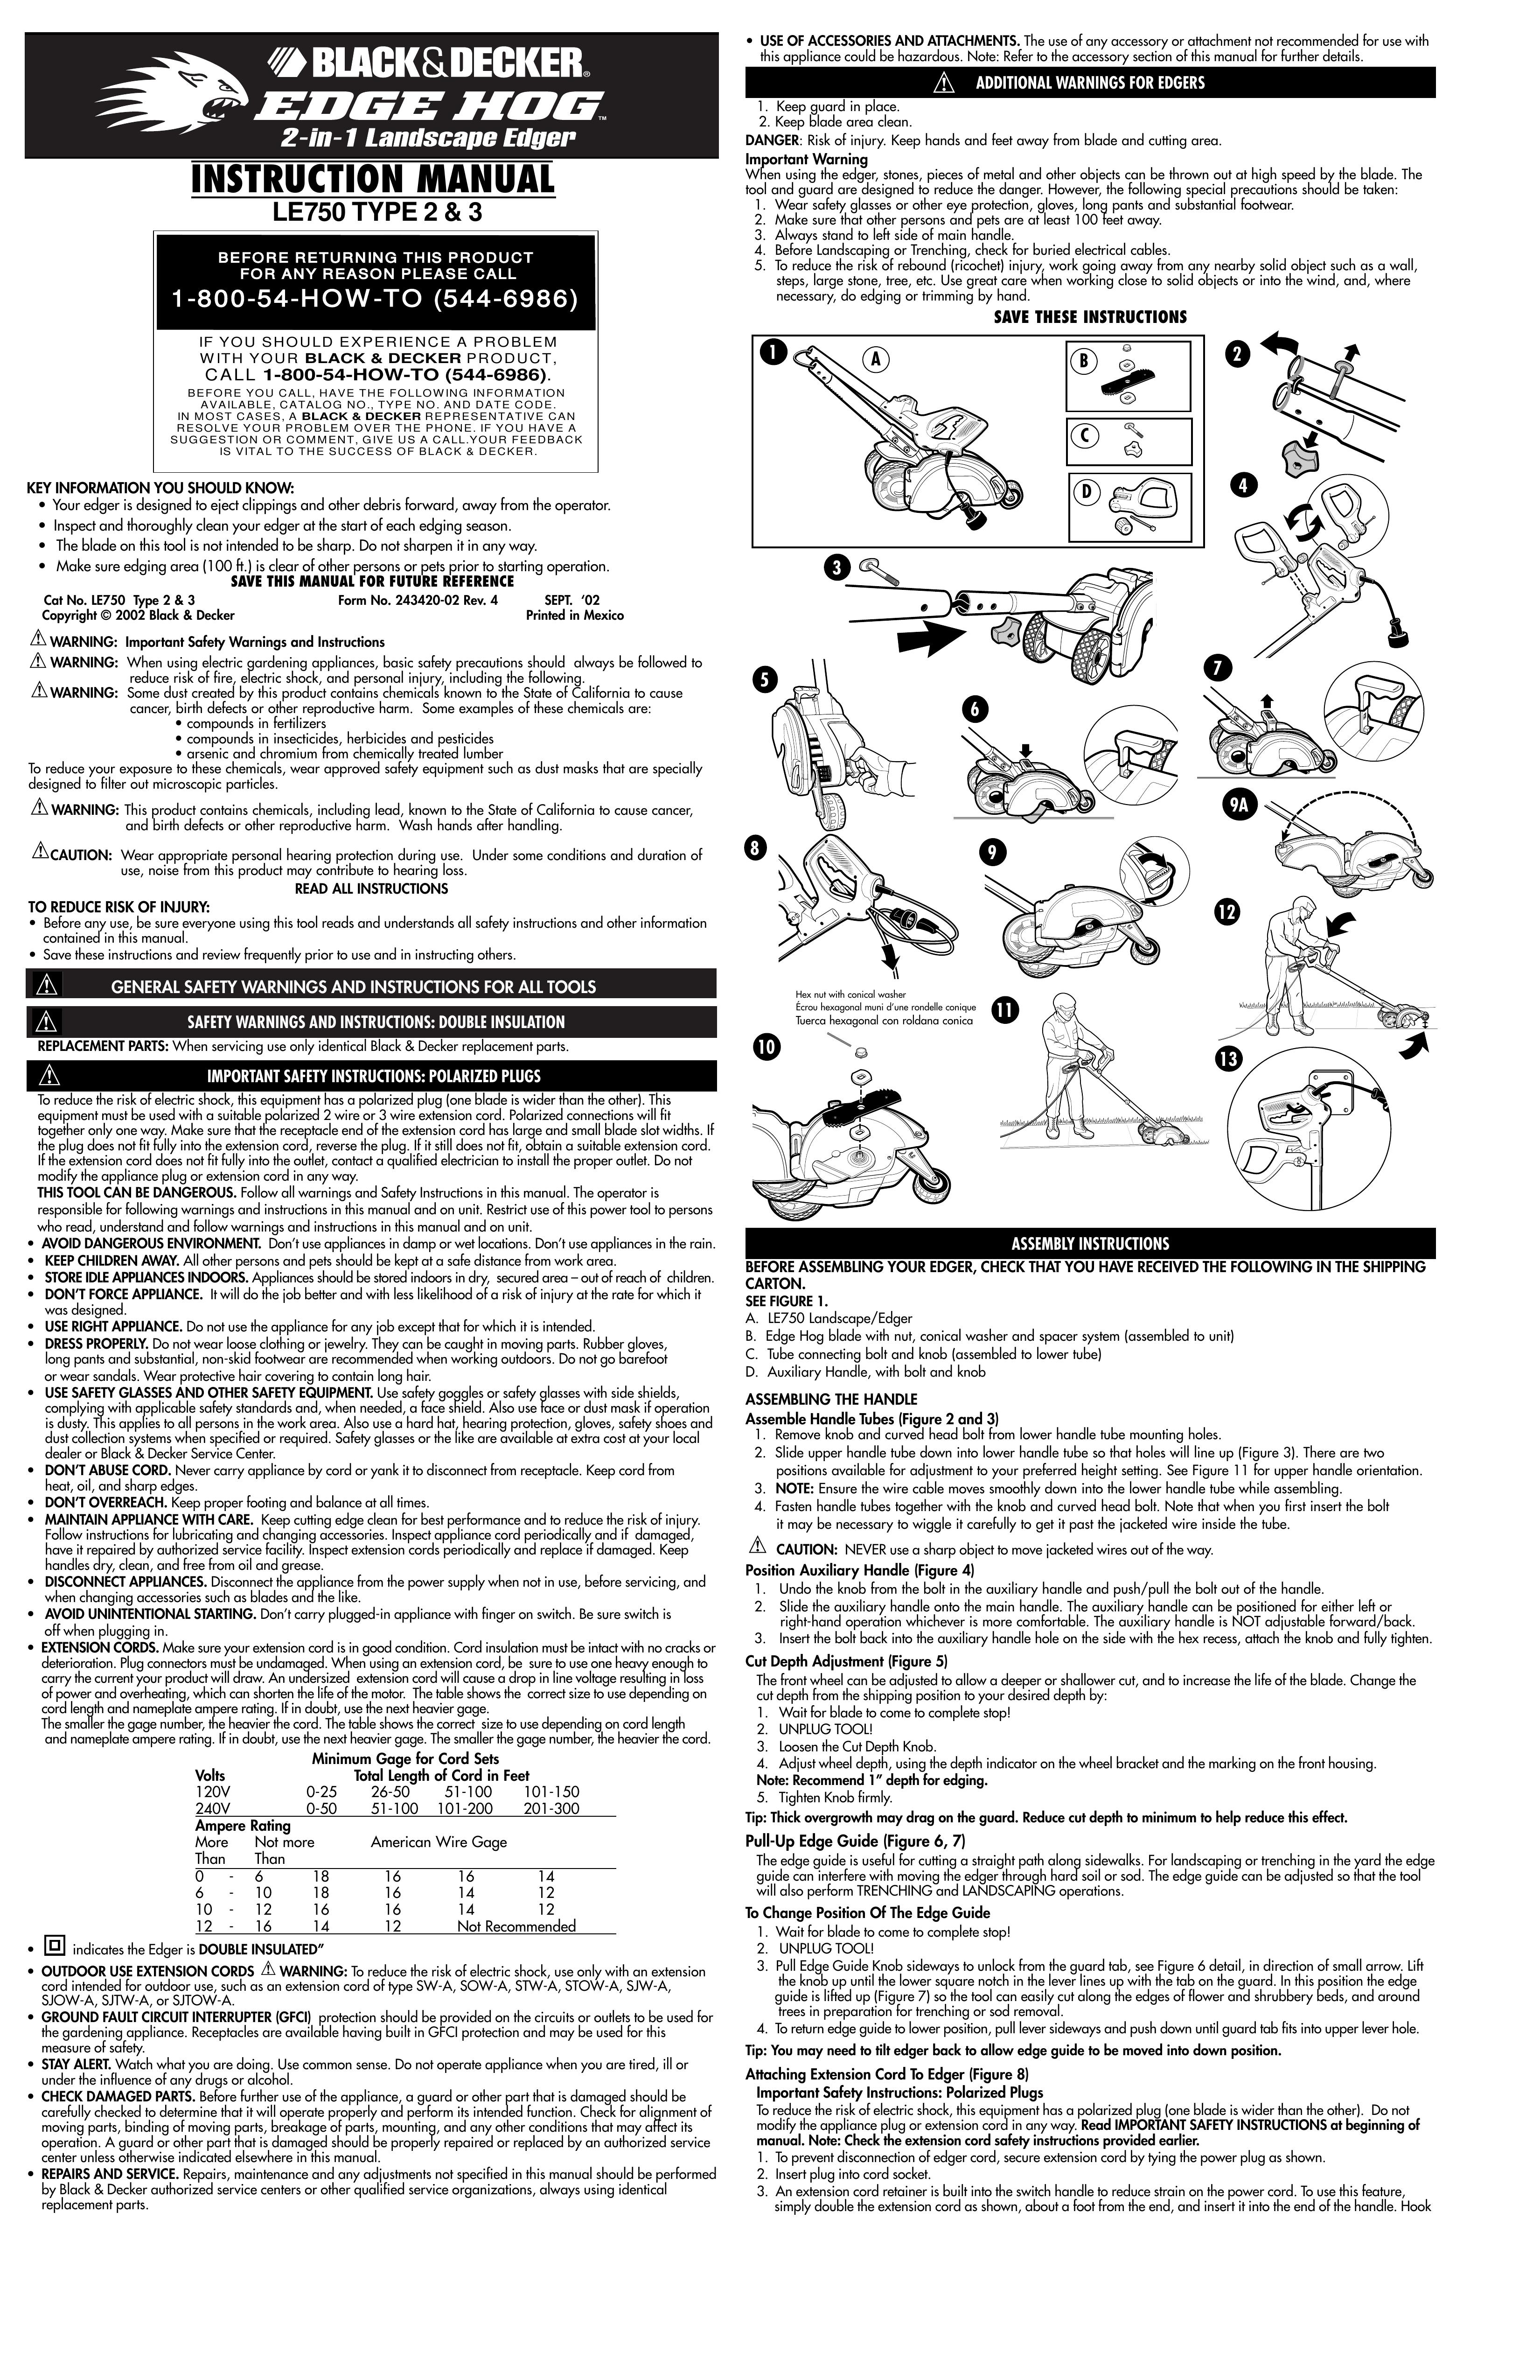 Black & Decker LE750 Edger User Manual